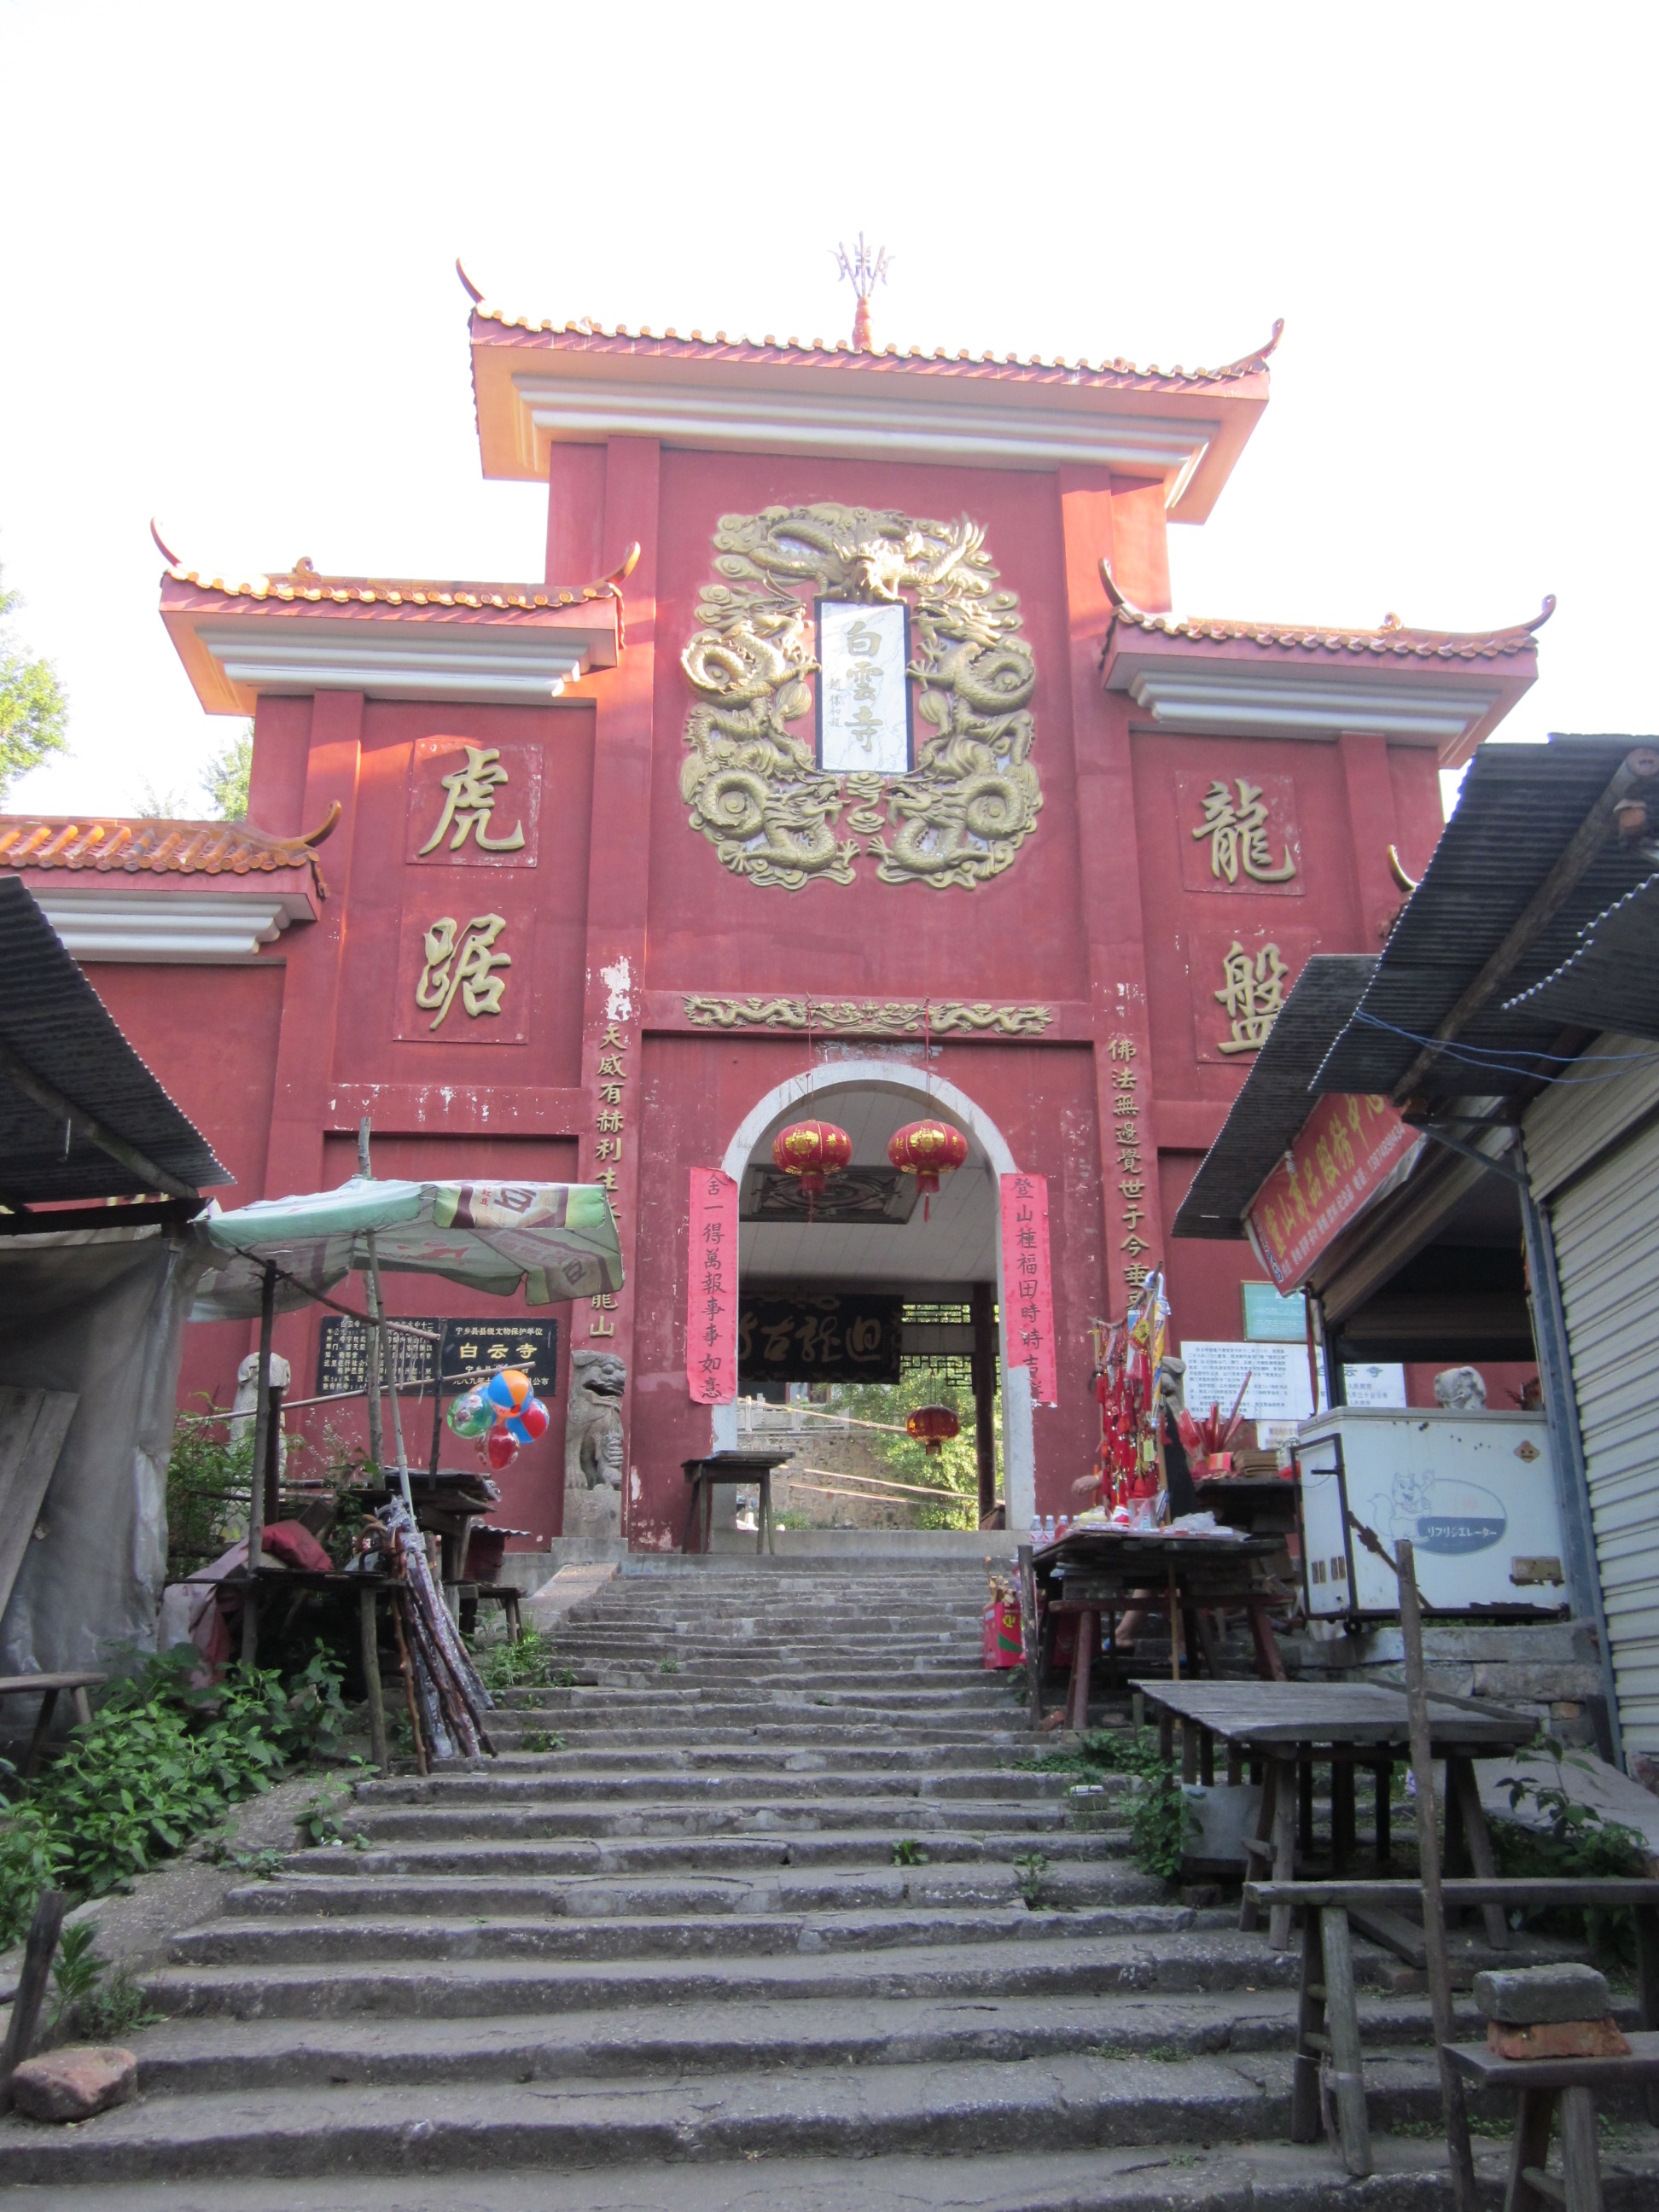 Temple salak south chinese BERNAMA